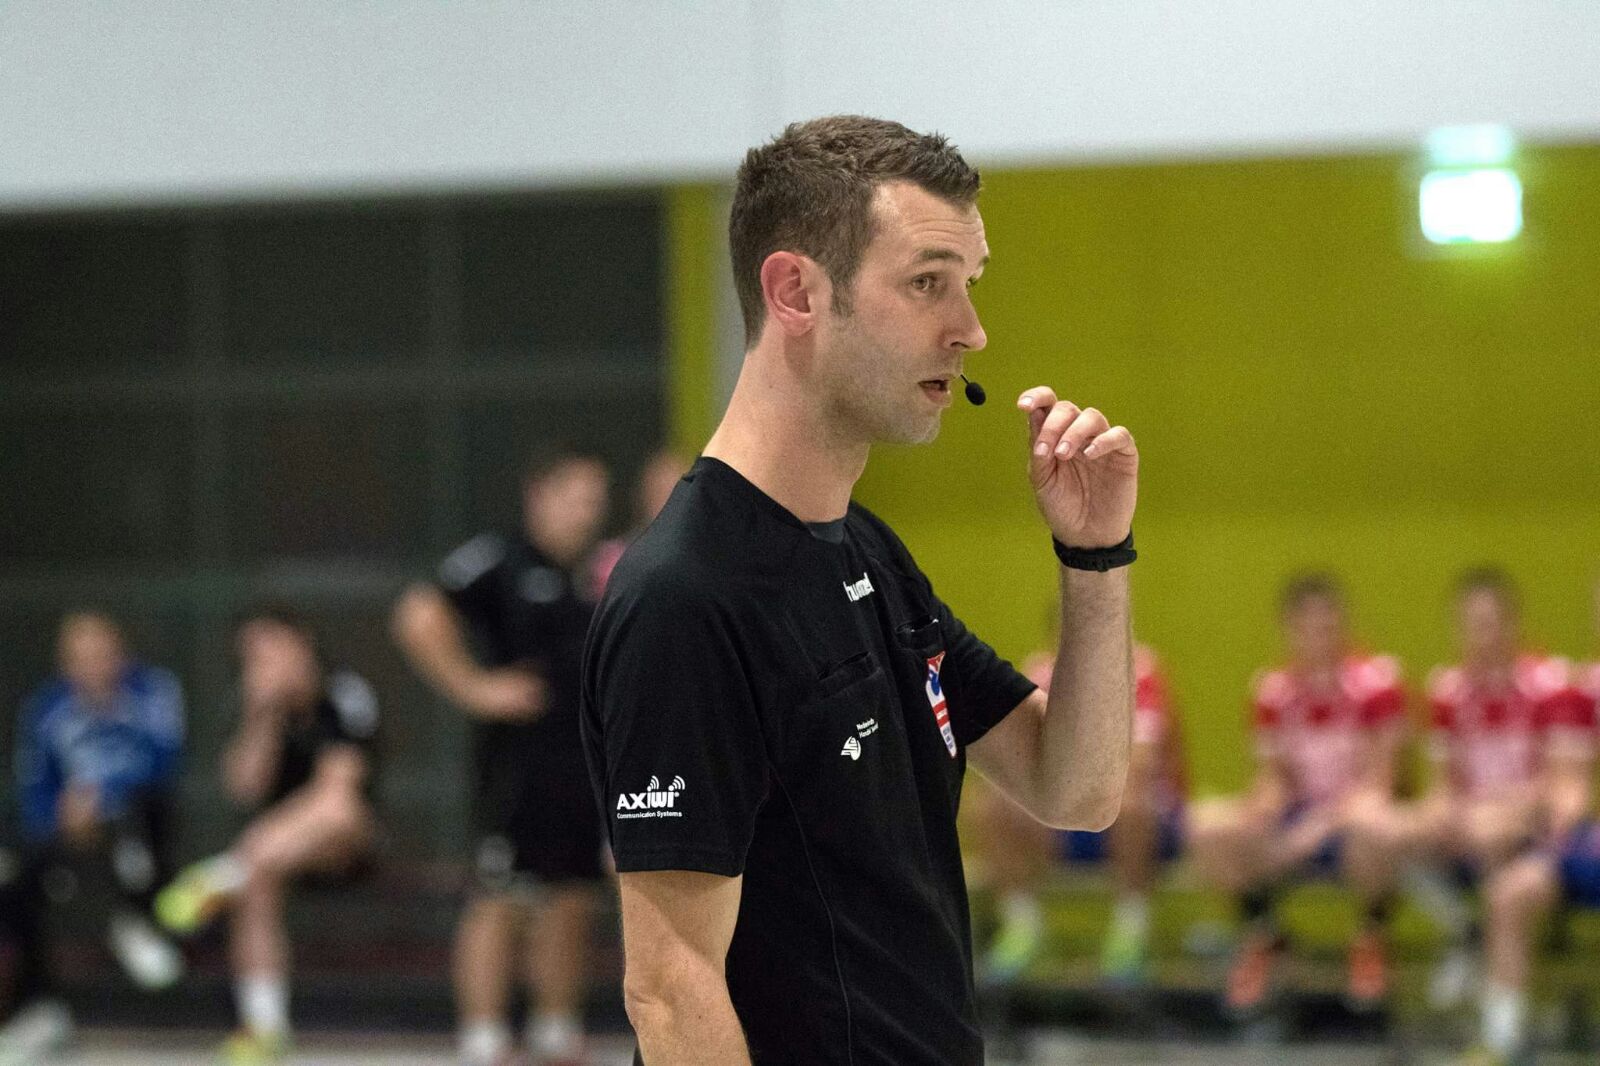 referee headset for handball referees